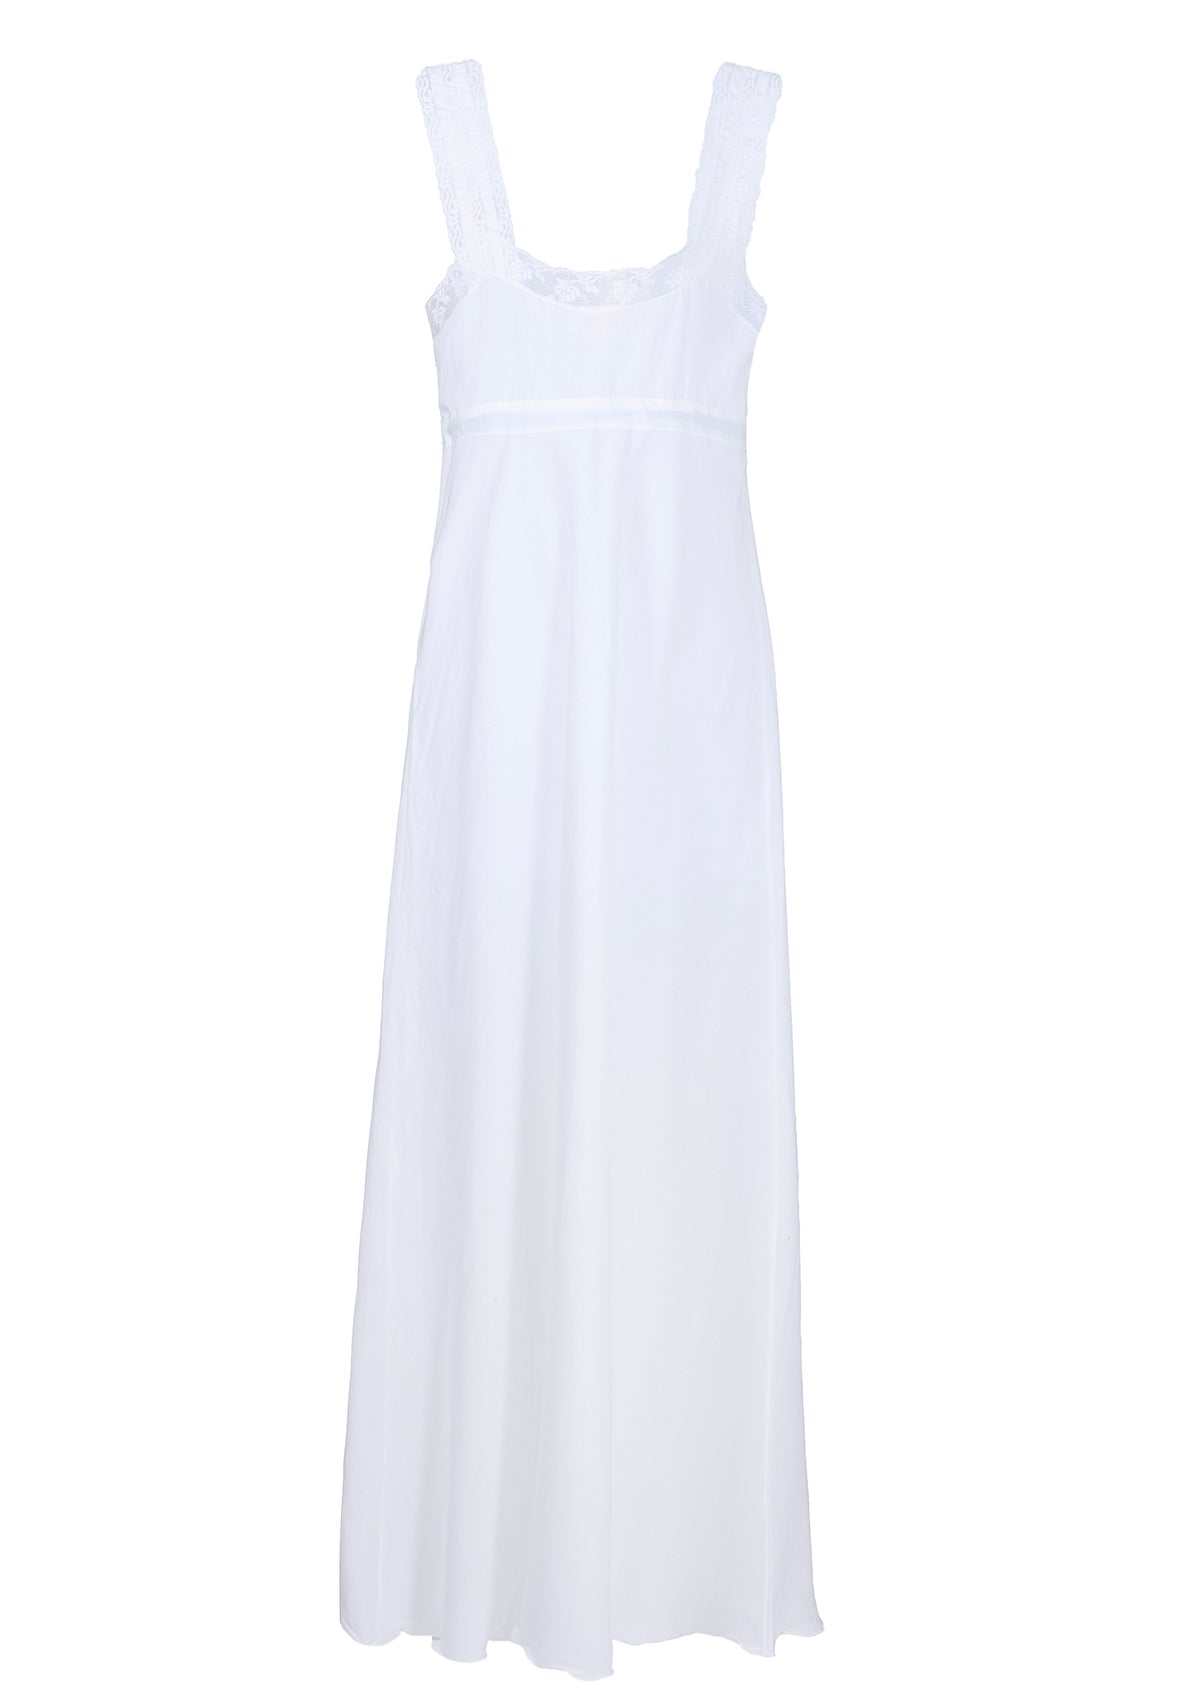 Hoara Cotton Nightgown